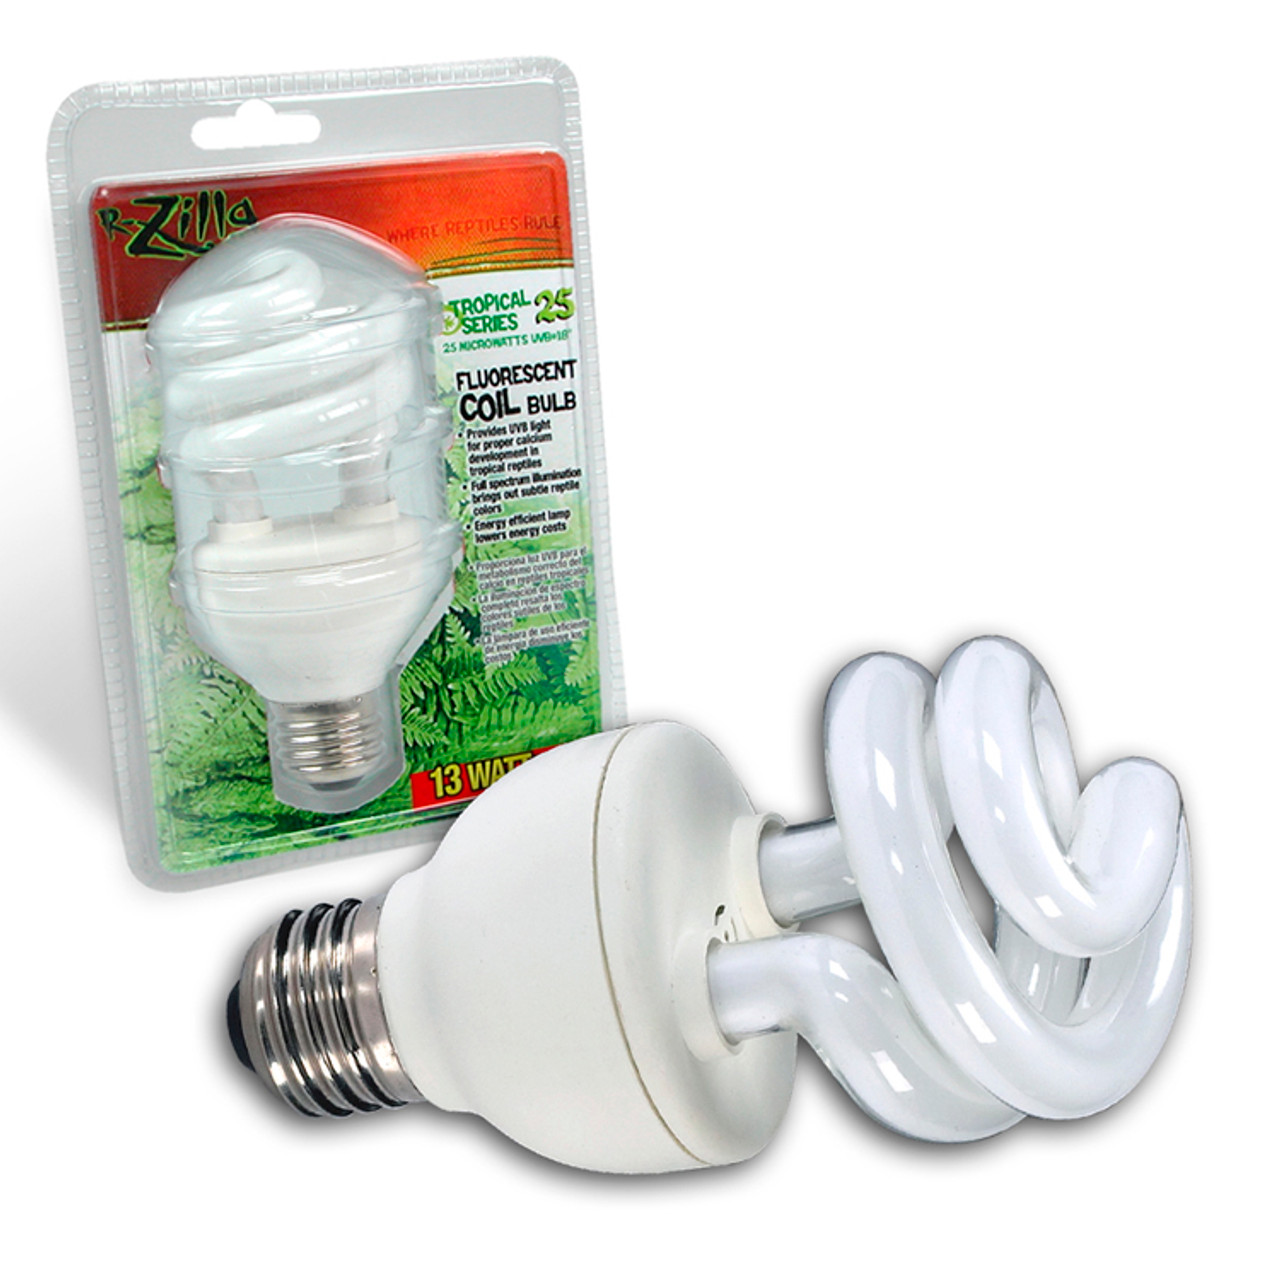 Zilla Tropical Series Fluorescent Coil Bulb 20 Watt